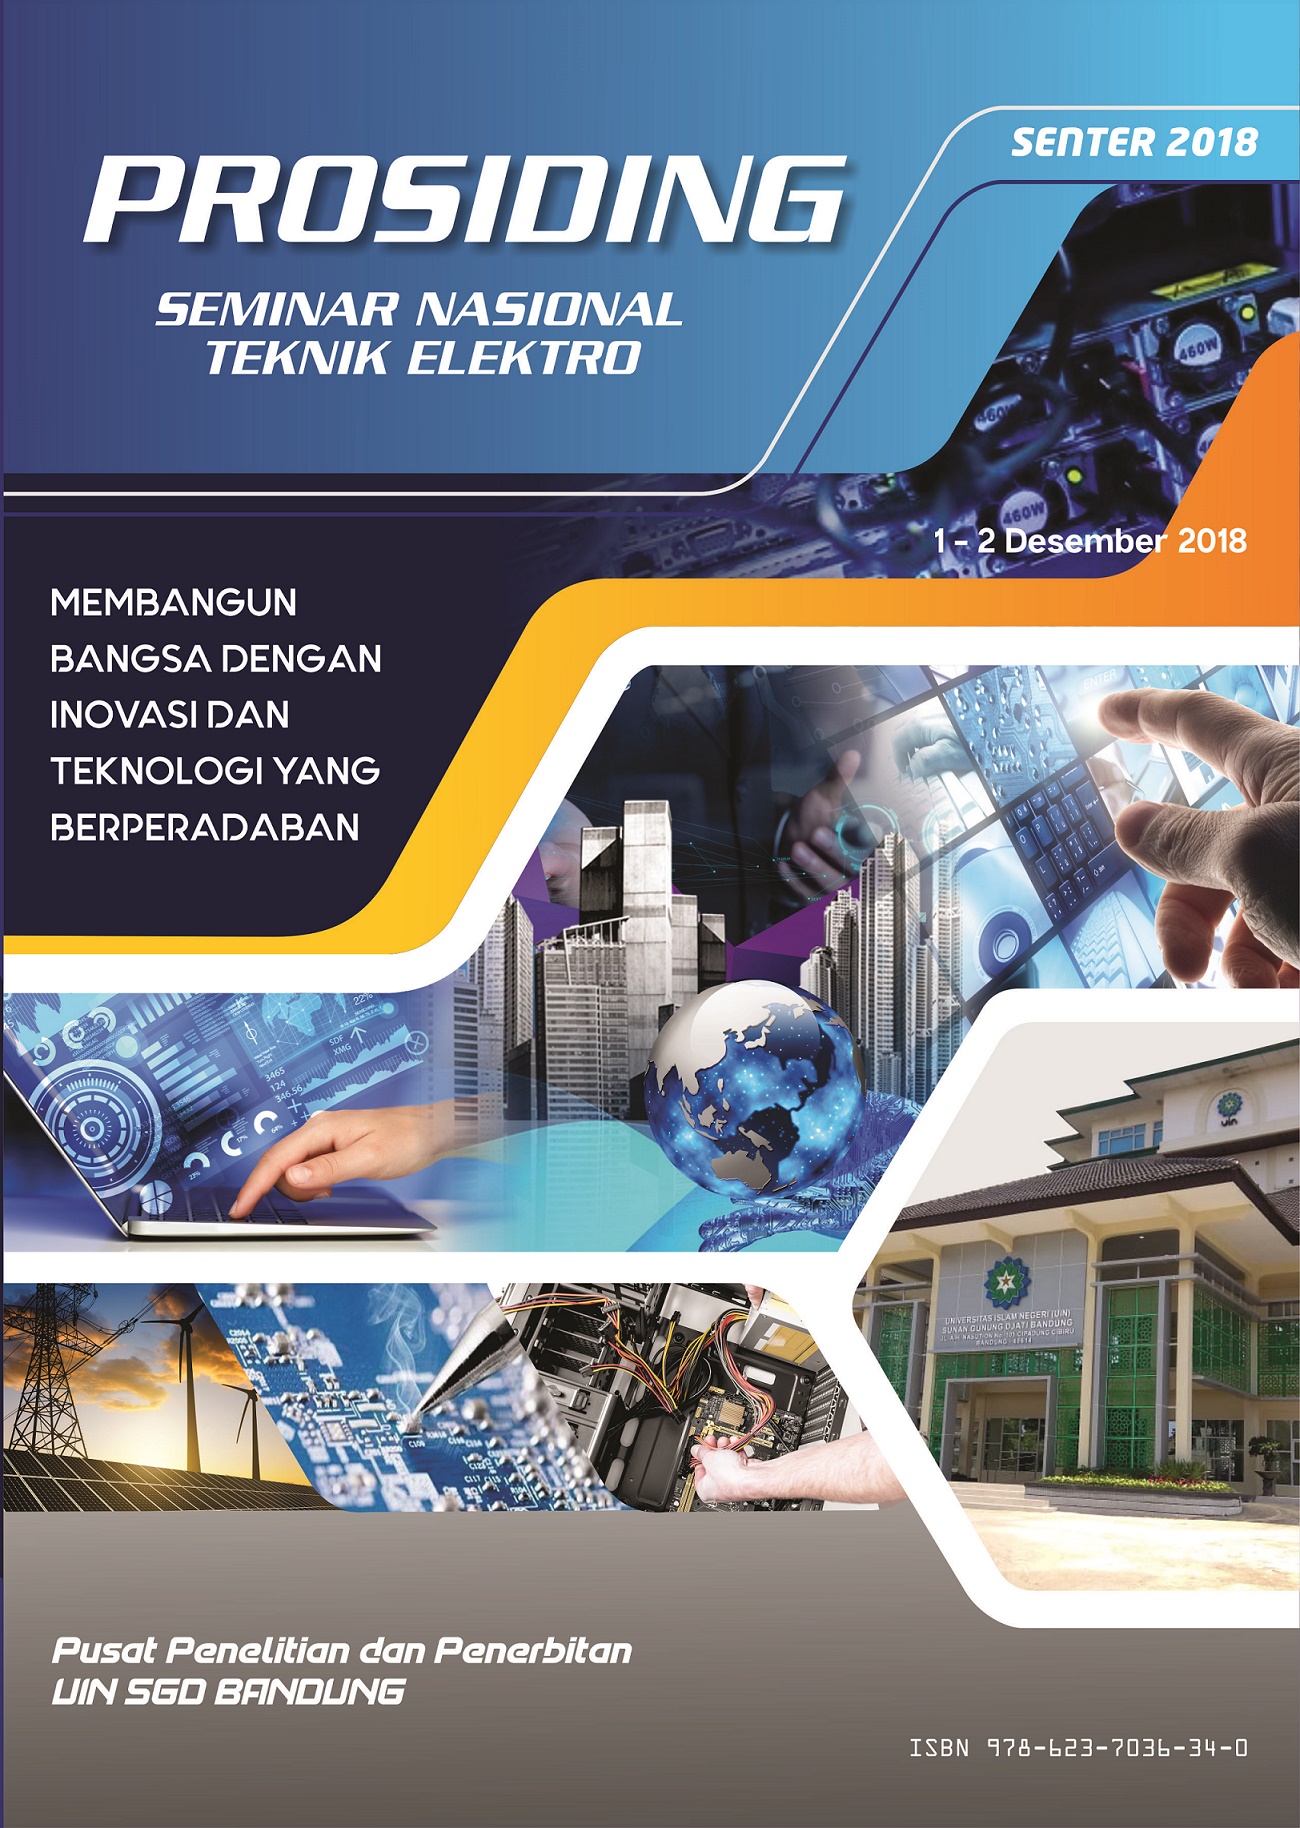 					View Seminar Nasional Teknik Elektro UIN Sunan Gunung Djati Bandung (SENTER 2018)
				